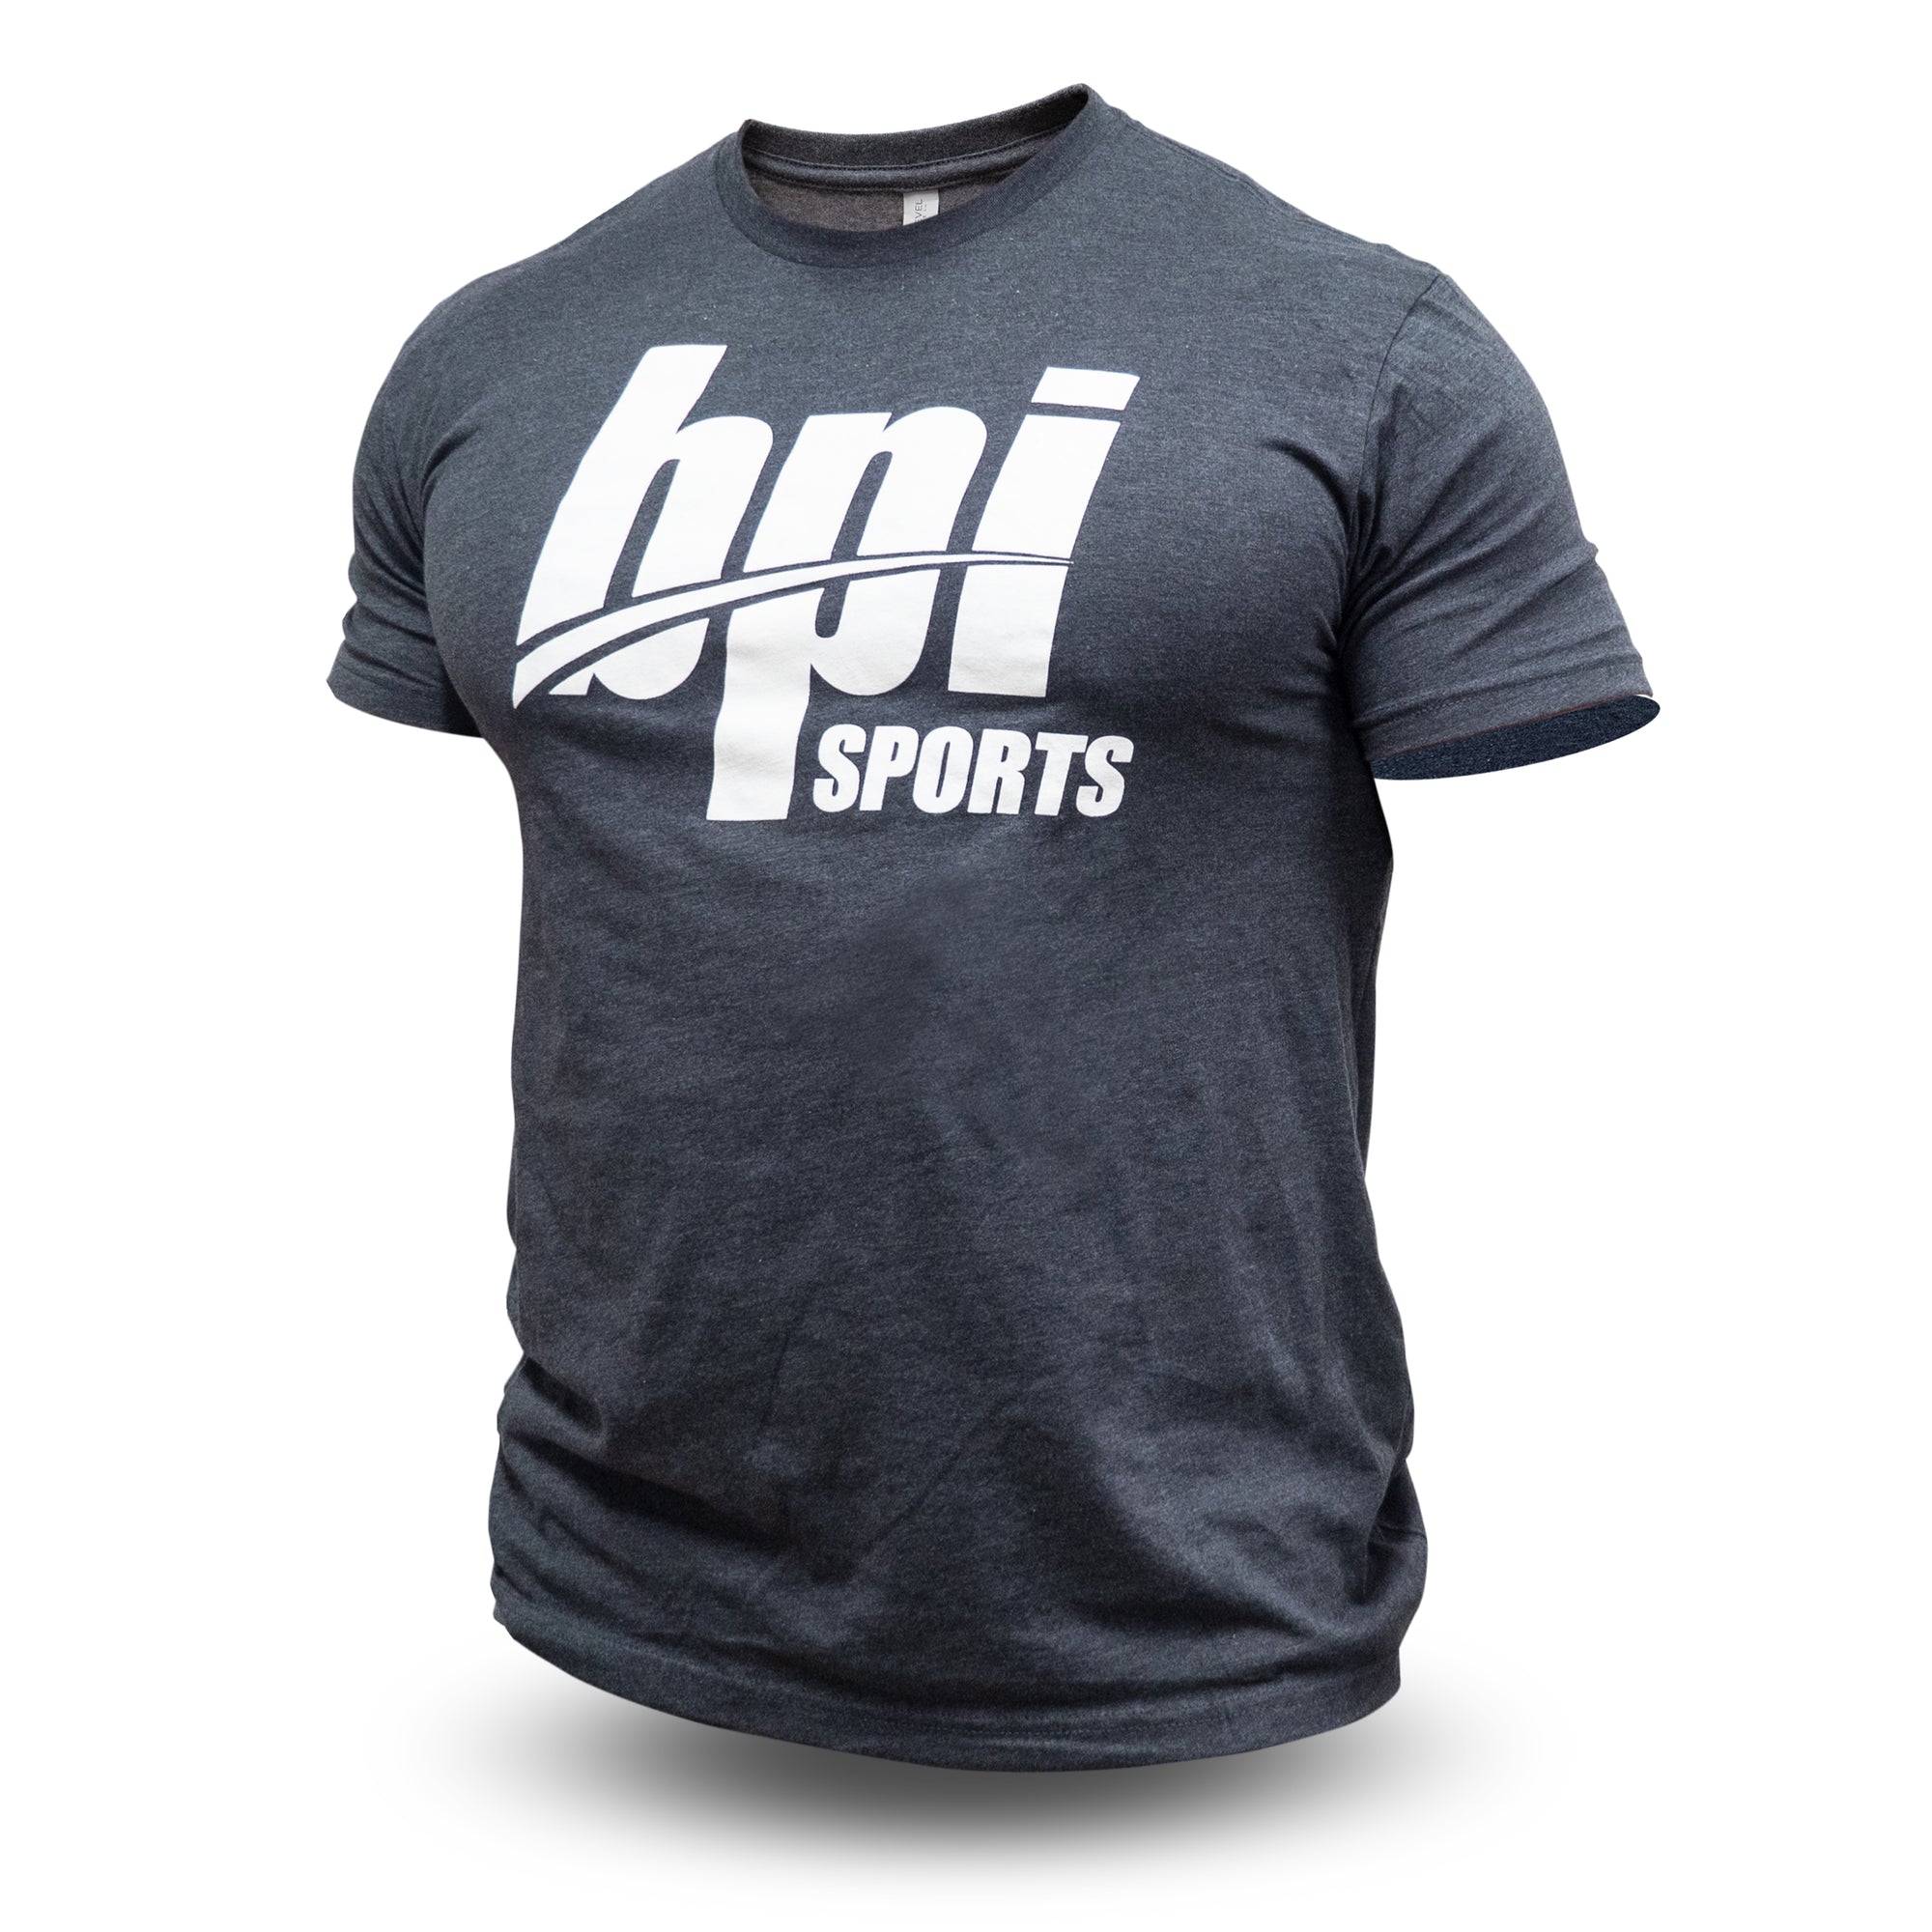 Tee shirt BPI Sports